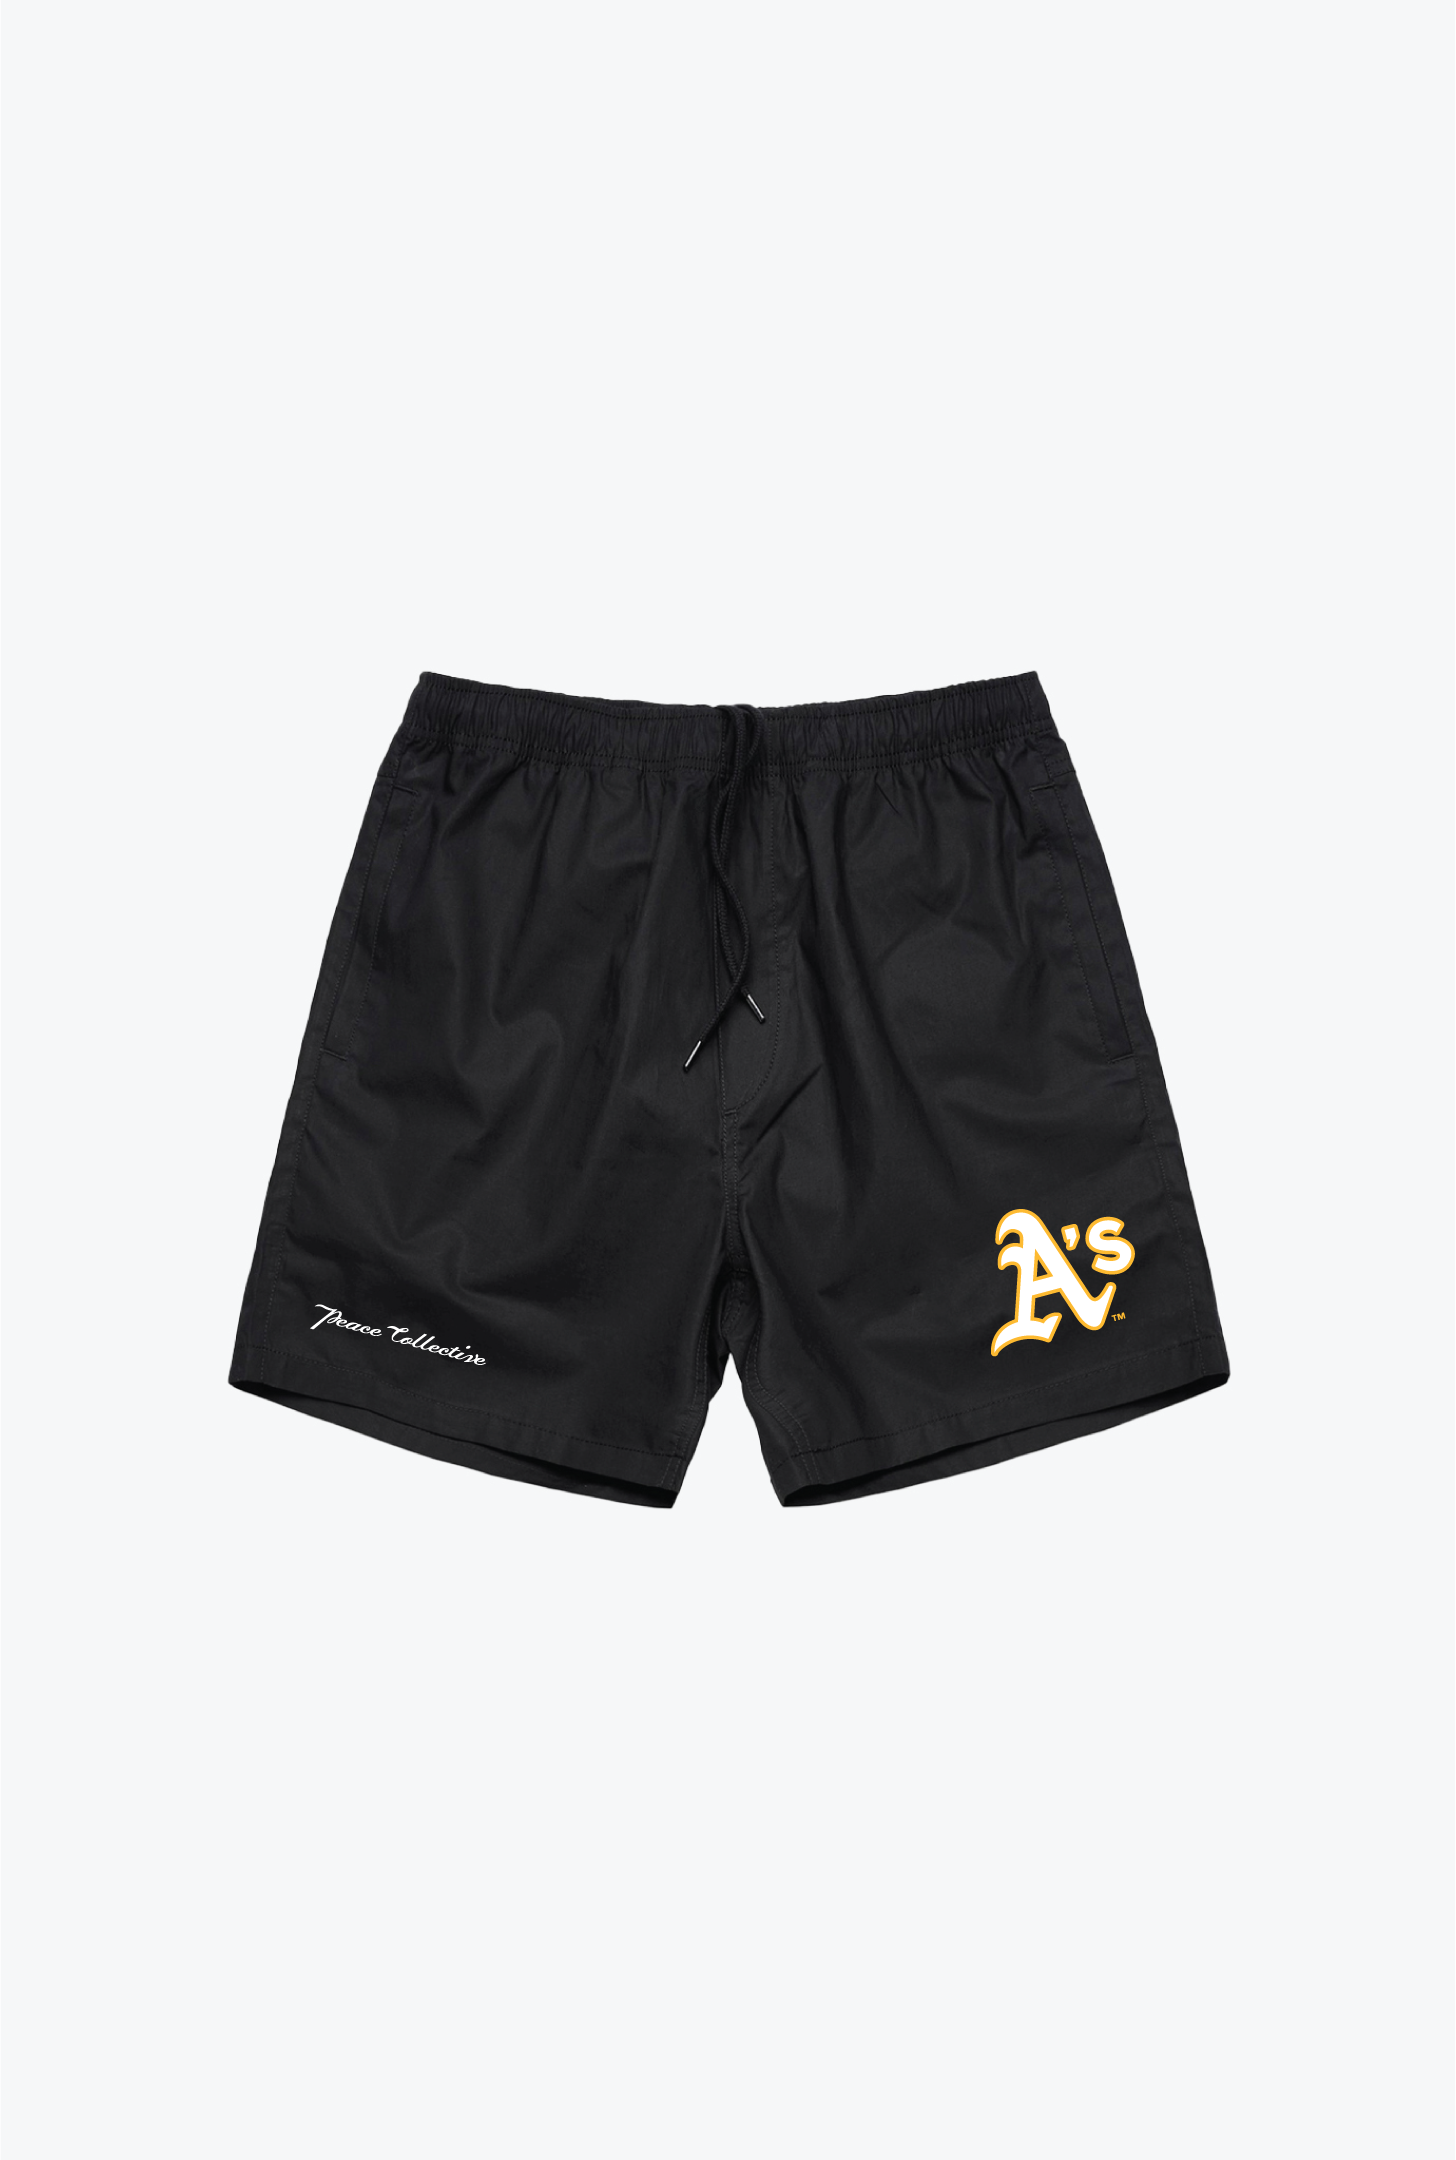 Oakland Athletics Board Shorts - Black